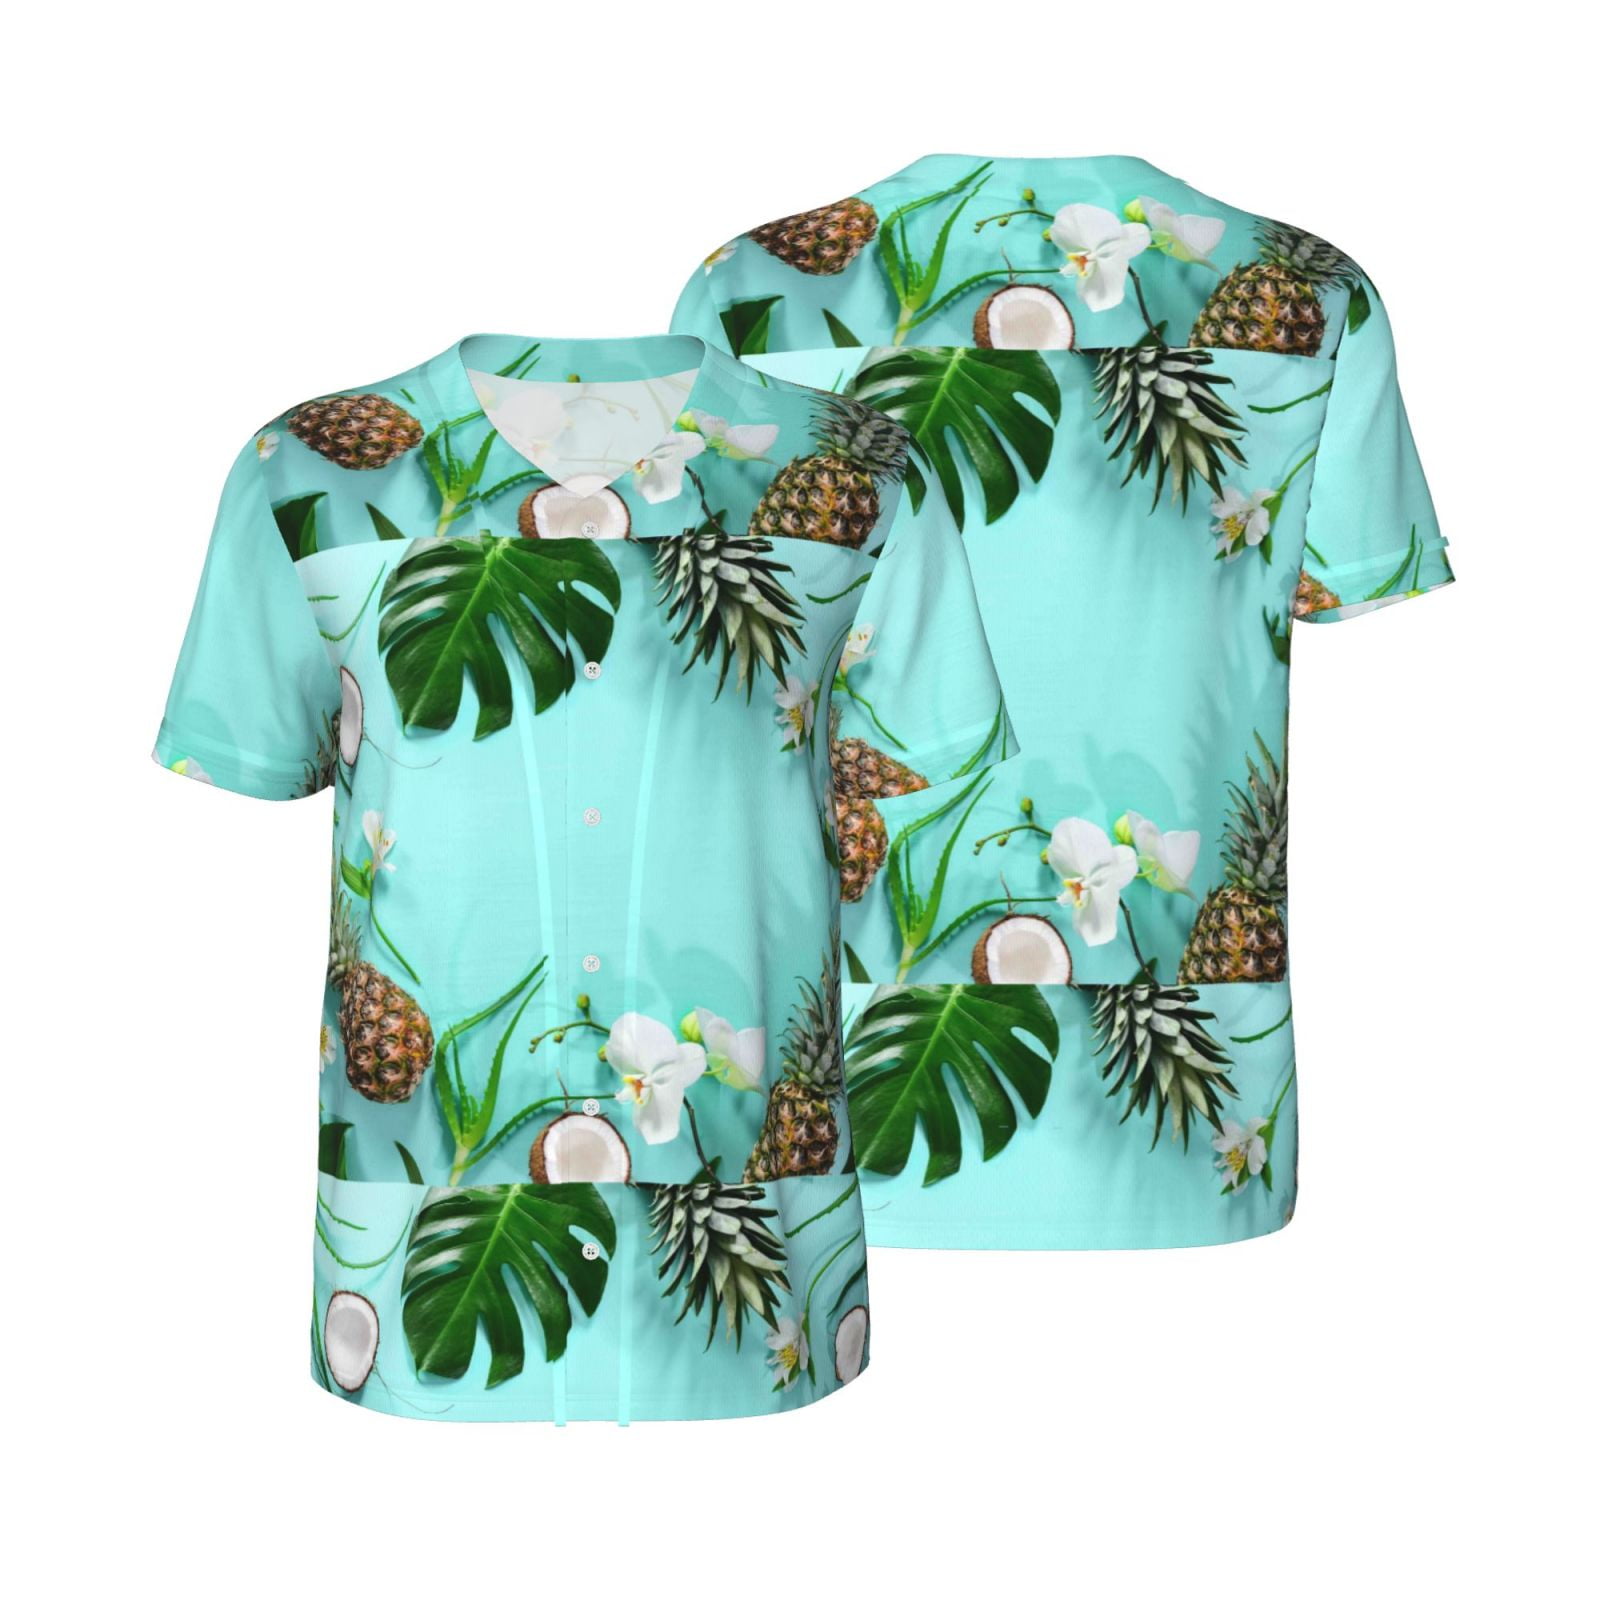 Gaeub Tropical Pineapple Men's Basketball Short Sleeves, Beach Vacation ...